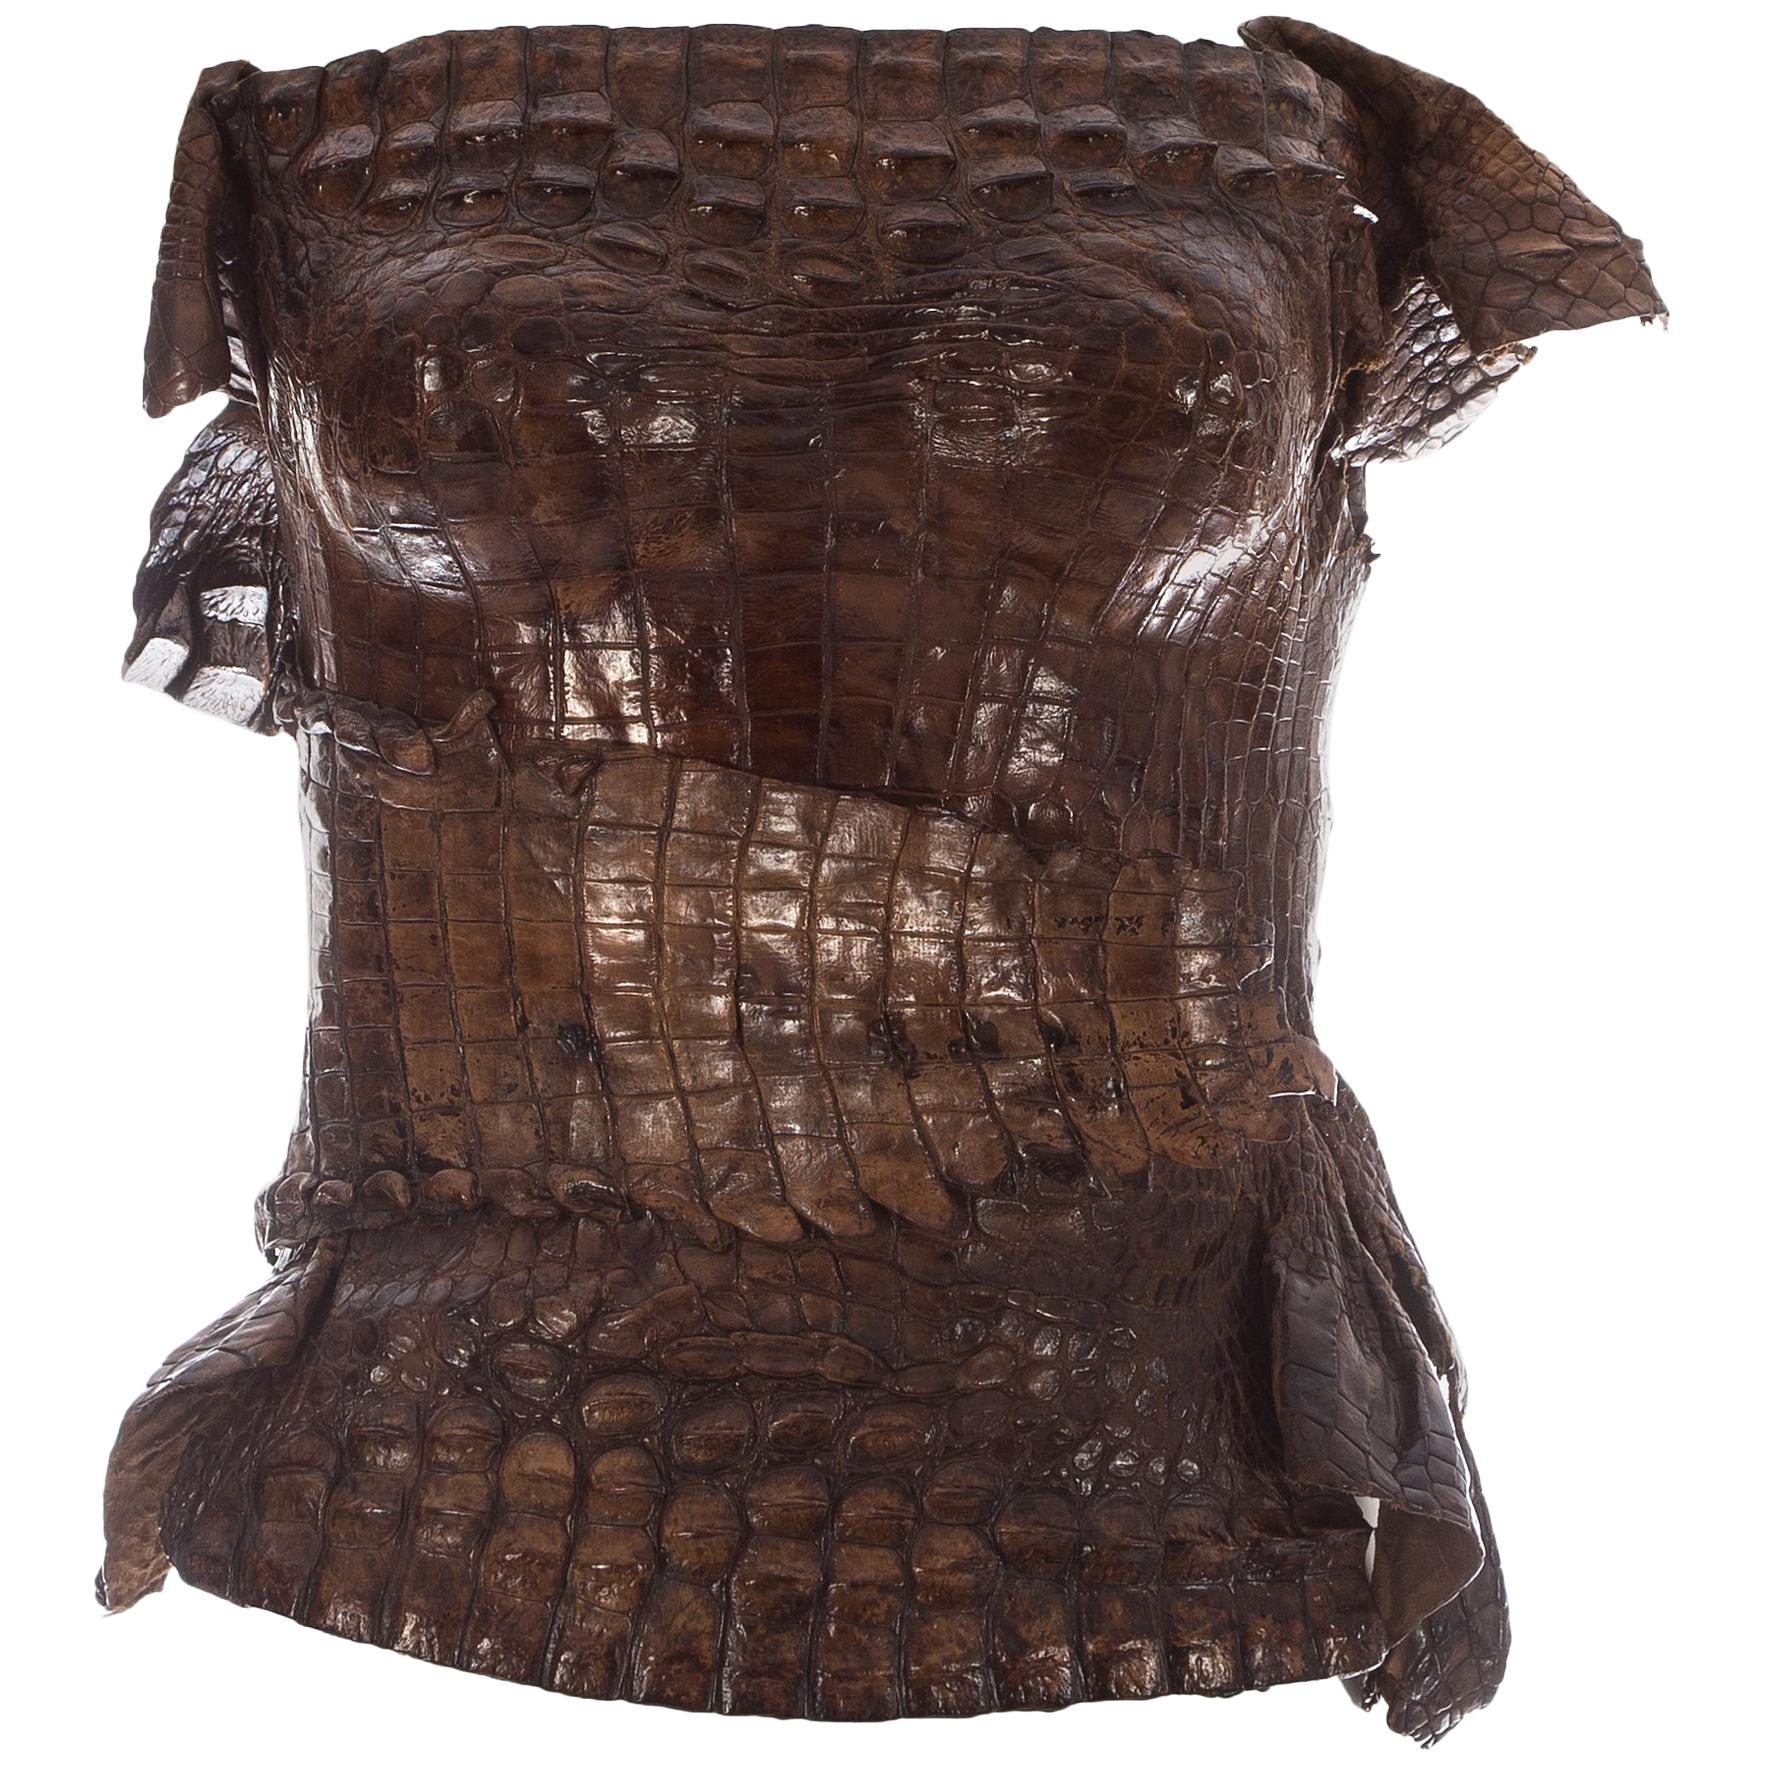 Roberto Cavalli tan crocodile corset bustier, c. 2000s